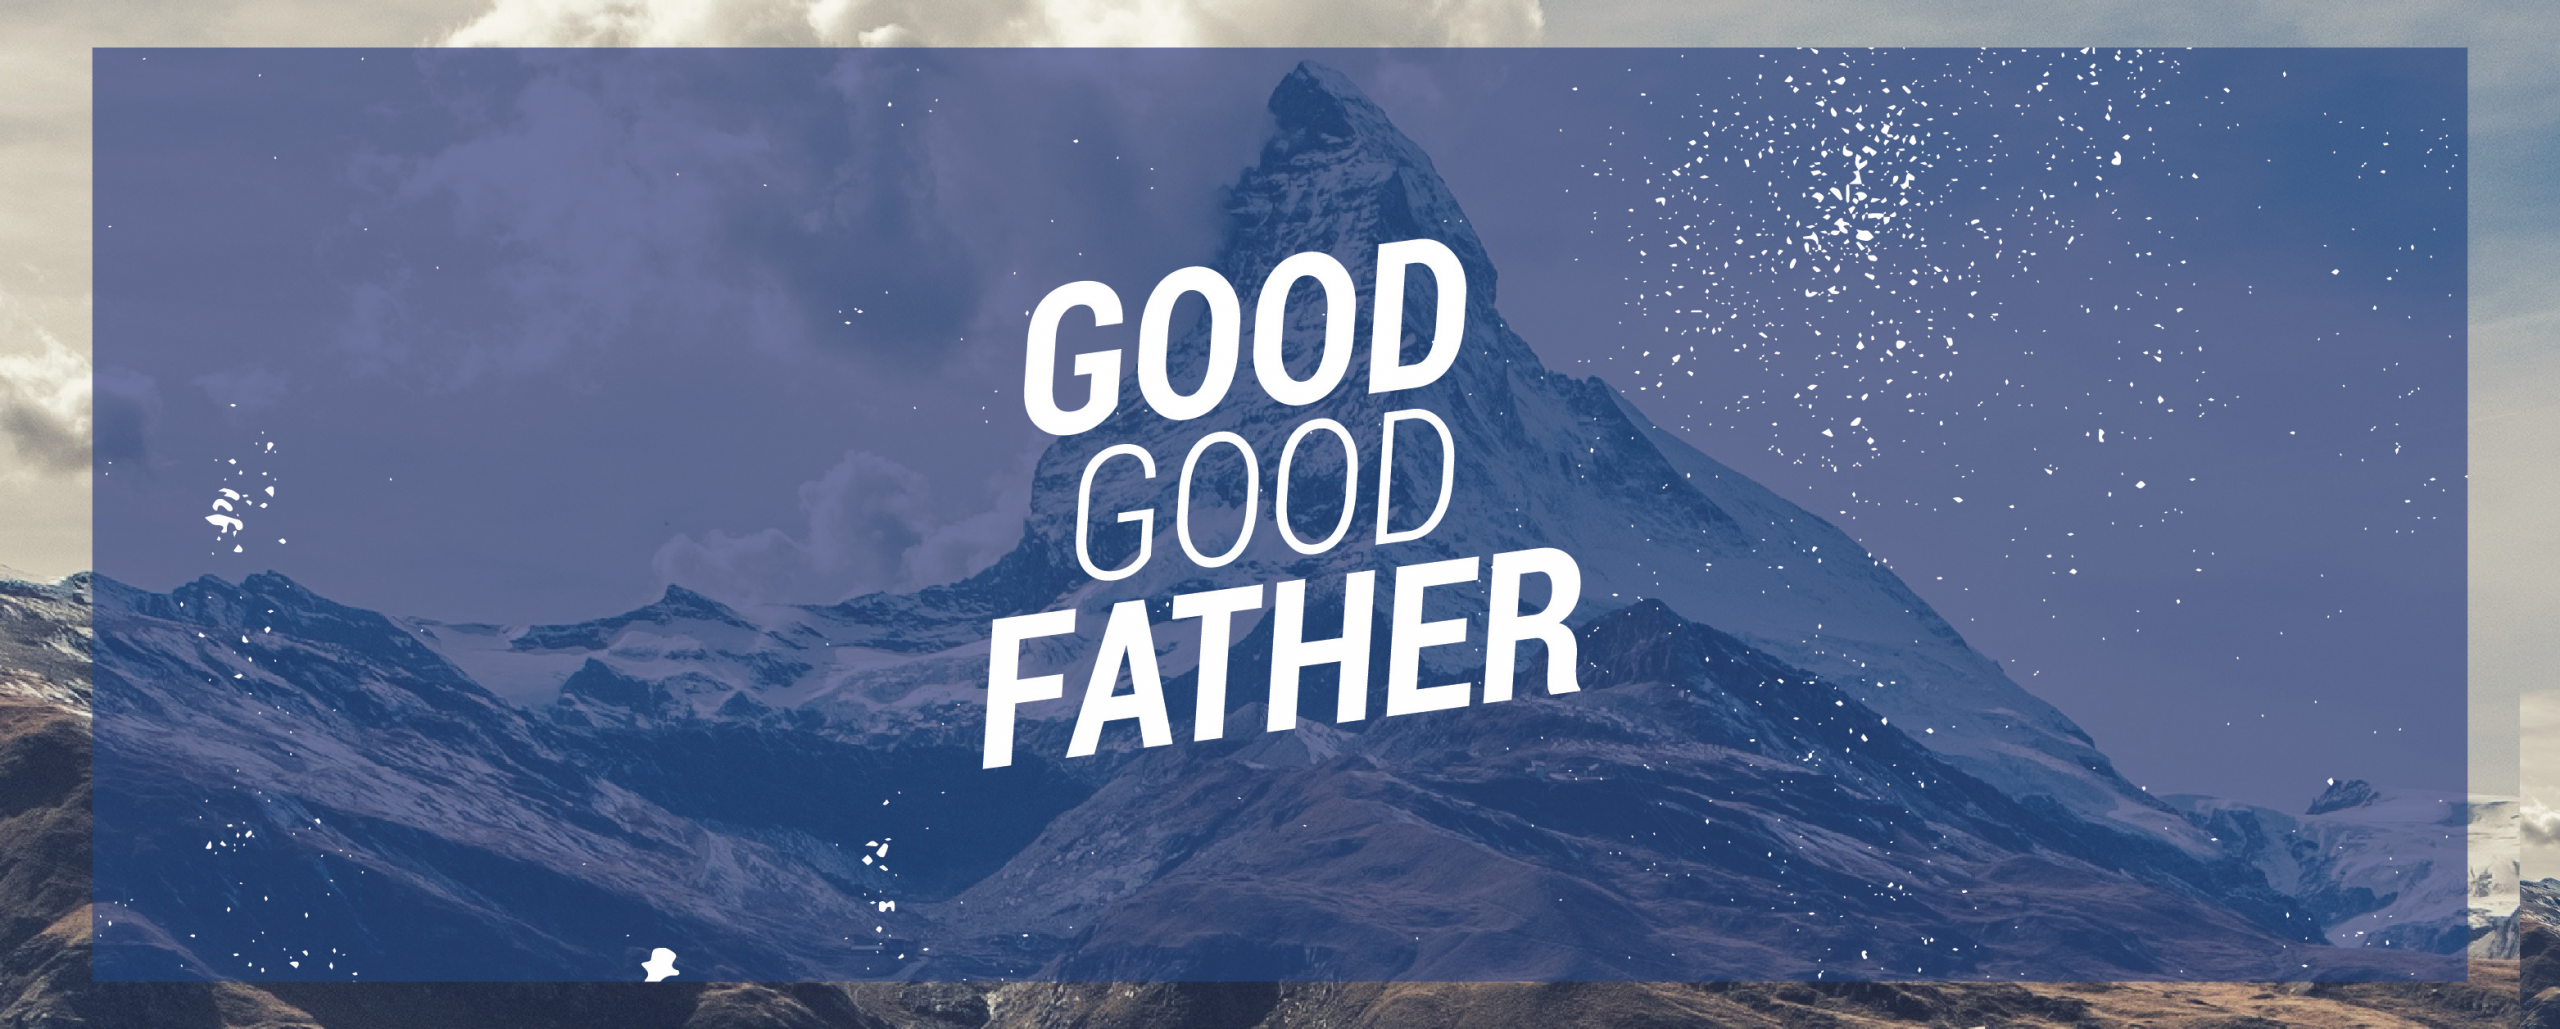 Fathers Day Sermon Ideas
 Good Good Father – Church Sermon Series Ideas